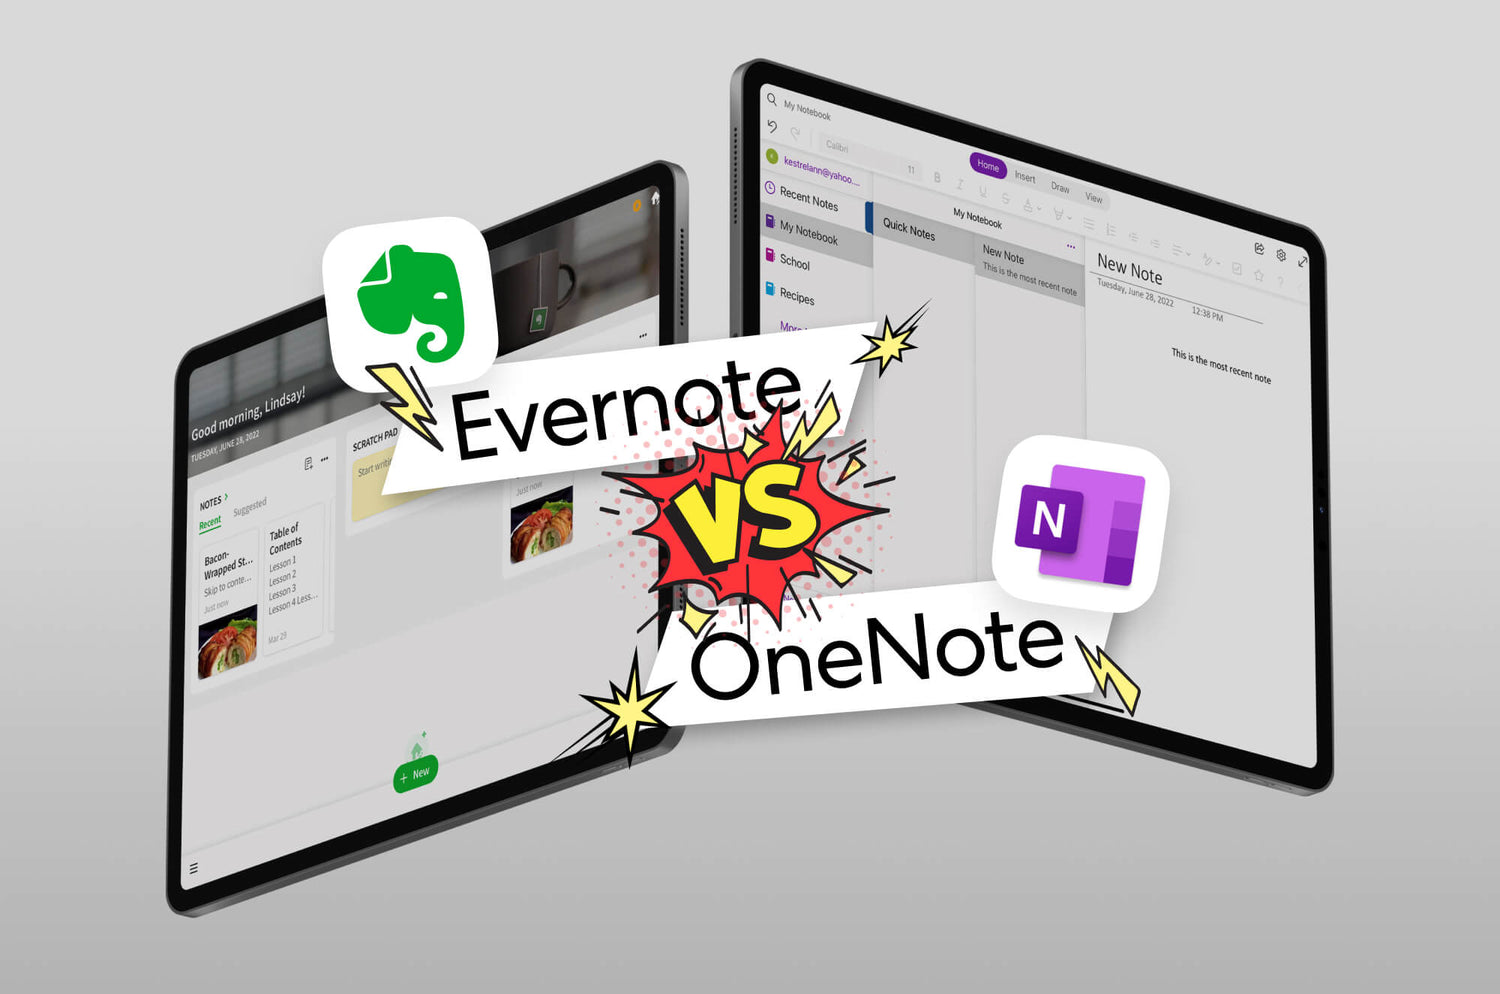 onenote app interface